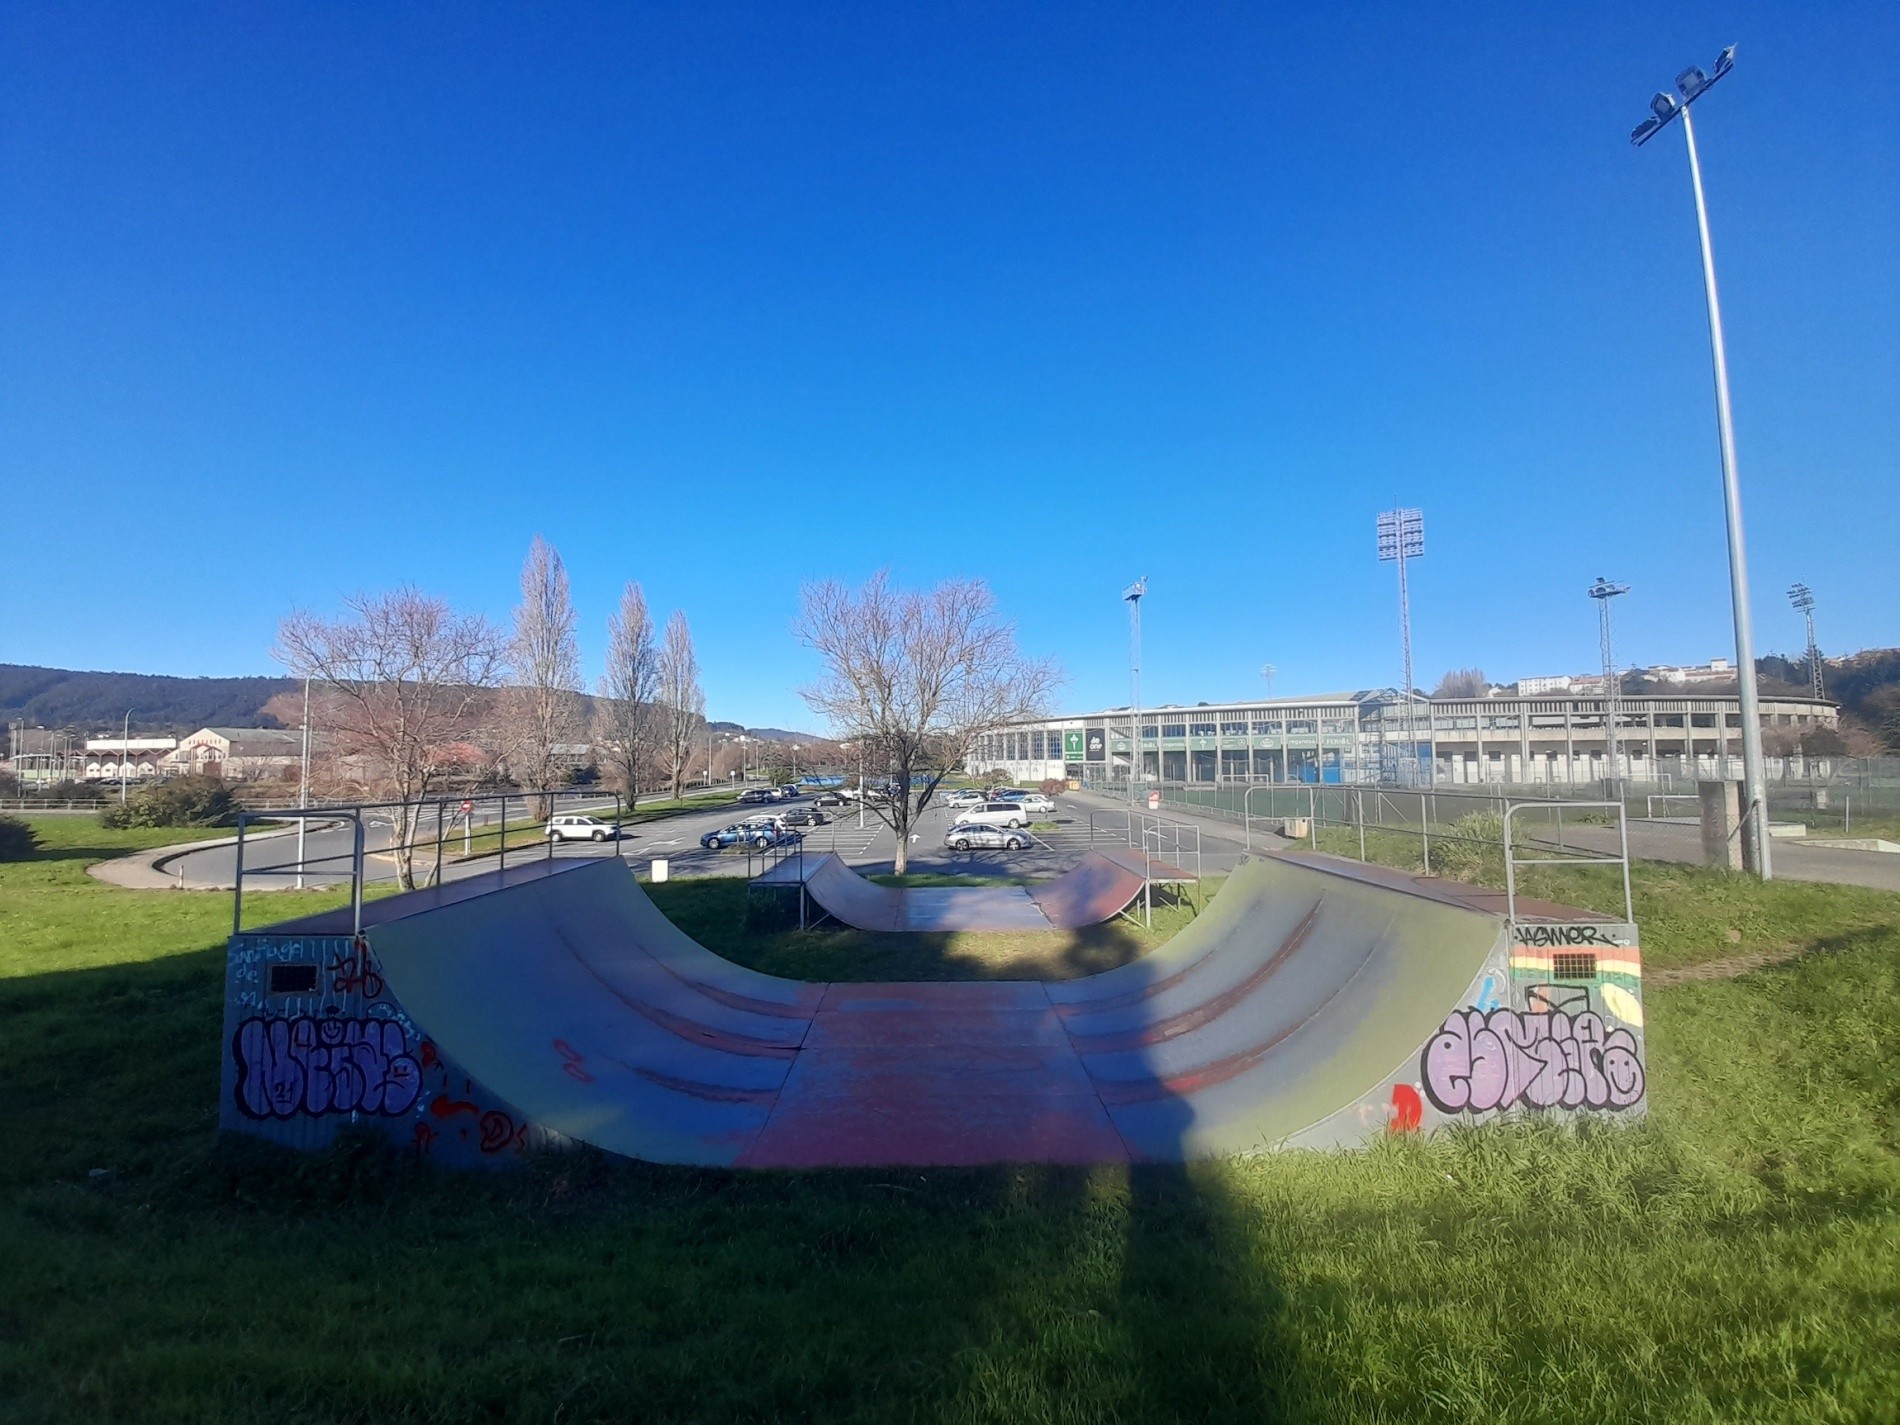 A Malata skatepark